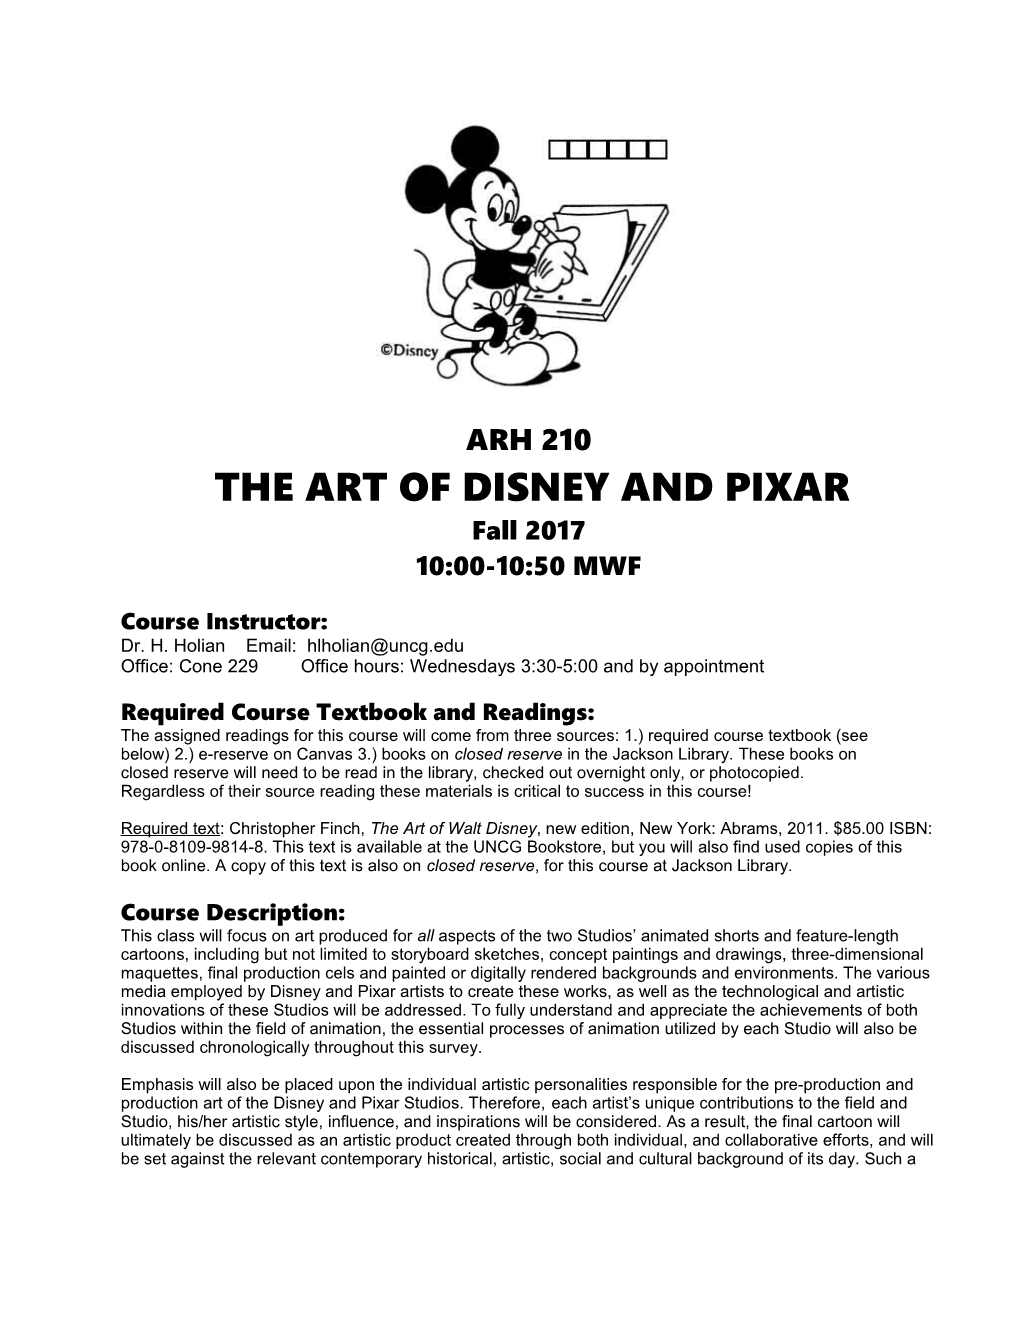 The Art of Walt Disney and His Studios